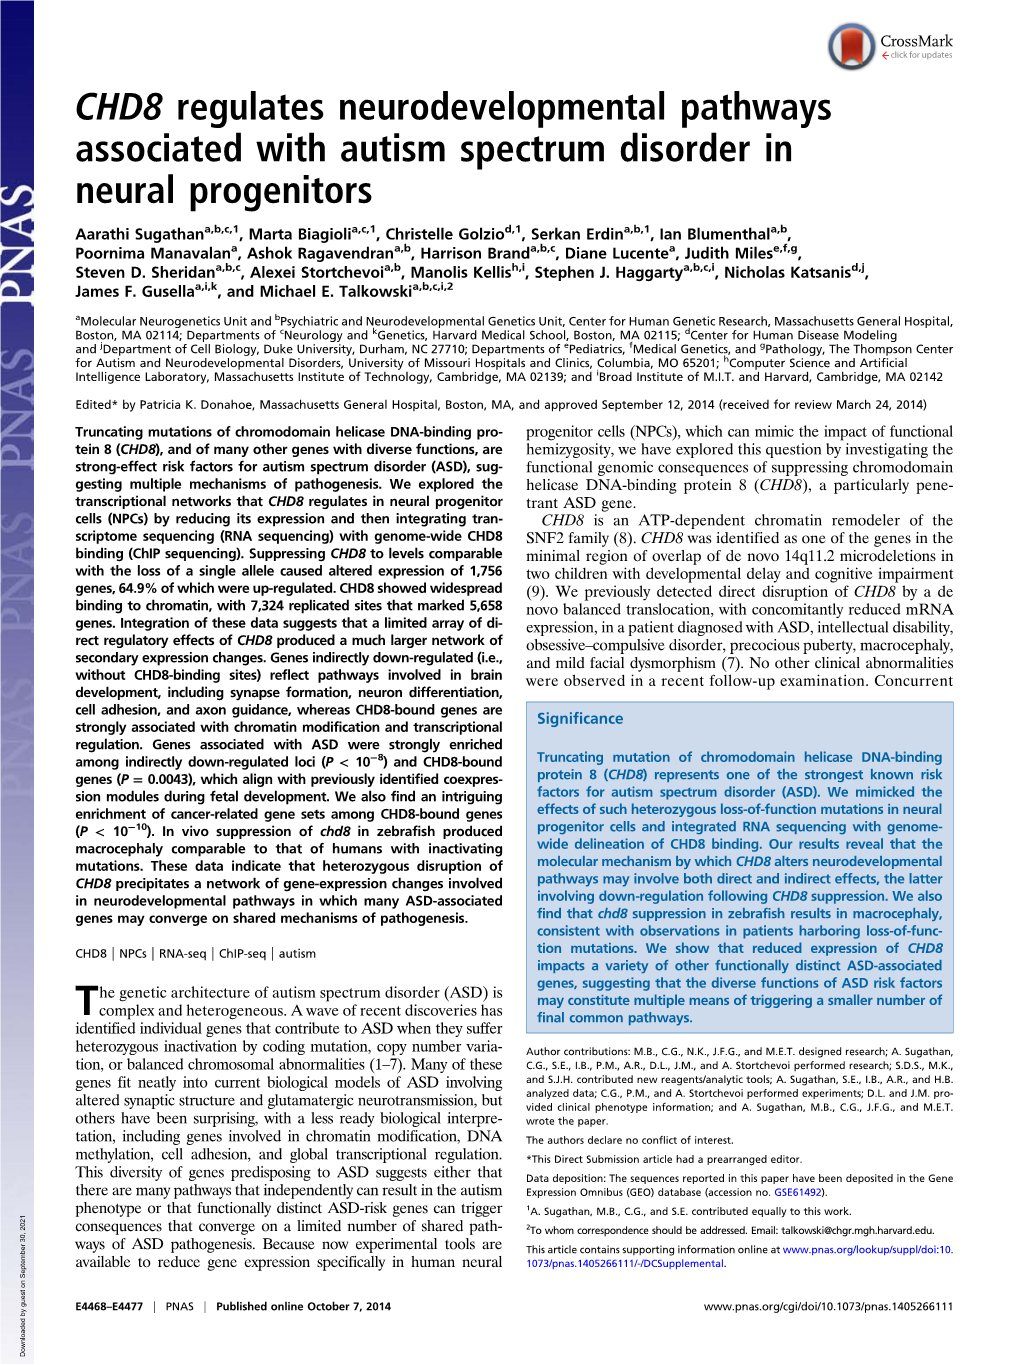 CHD8 Regulates Neurodevelopmental Pathways Associated with Autism Spectrum Disorder in Neural Progenitors